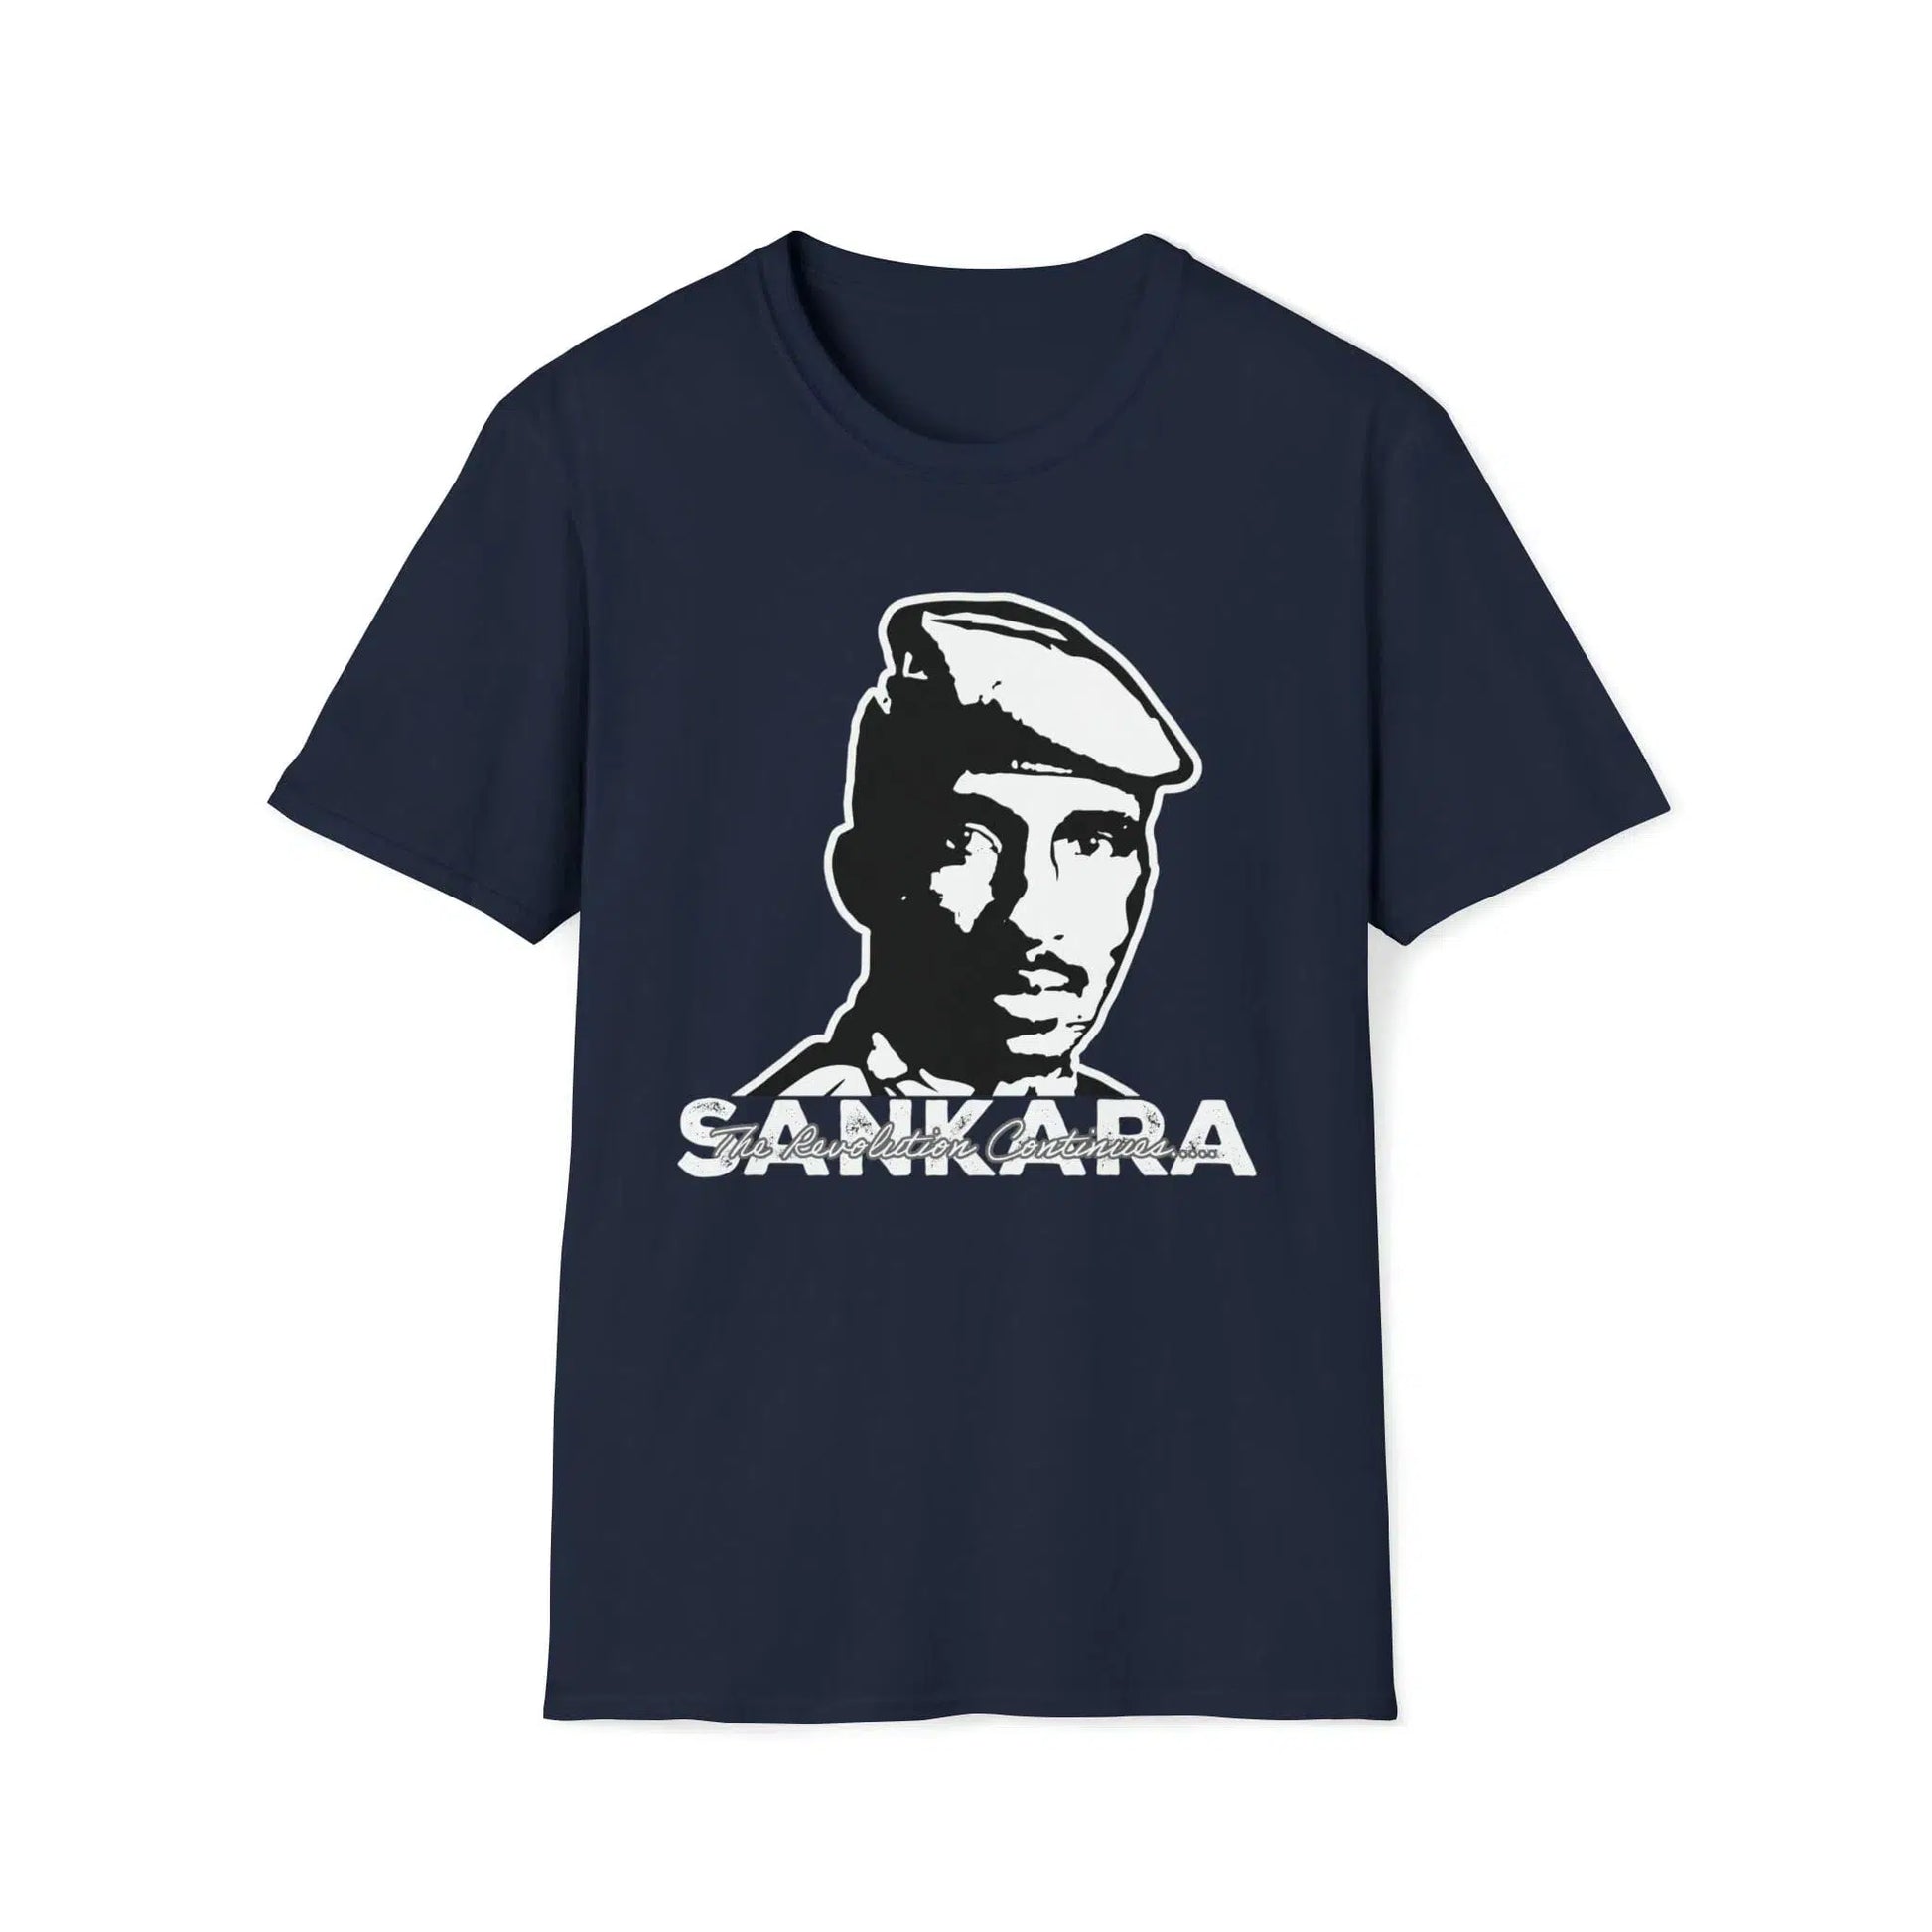 Thomas Sankara t shirt: Burkina Faso Pan African Icon